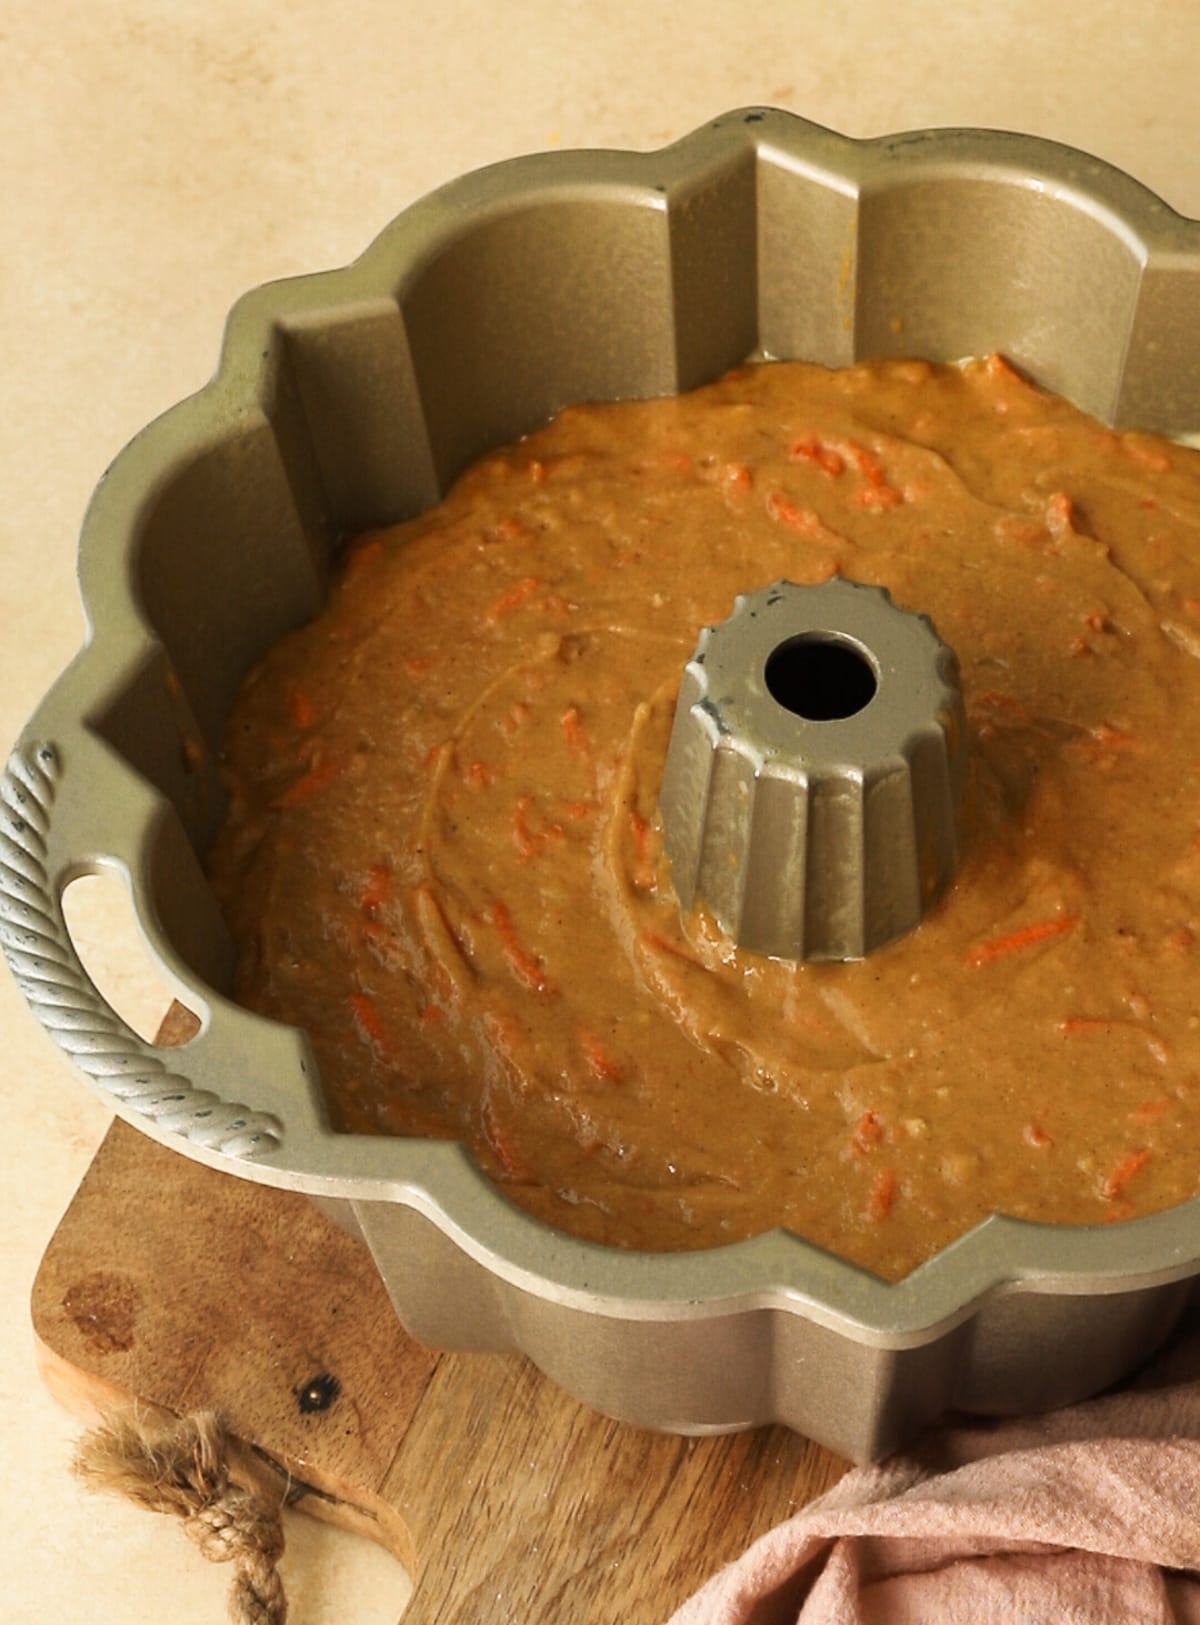 Carrot cake batter in a bundt pan.